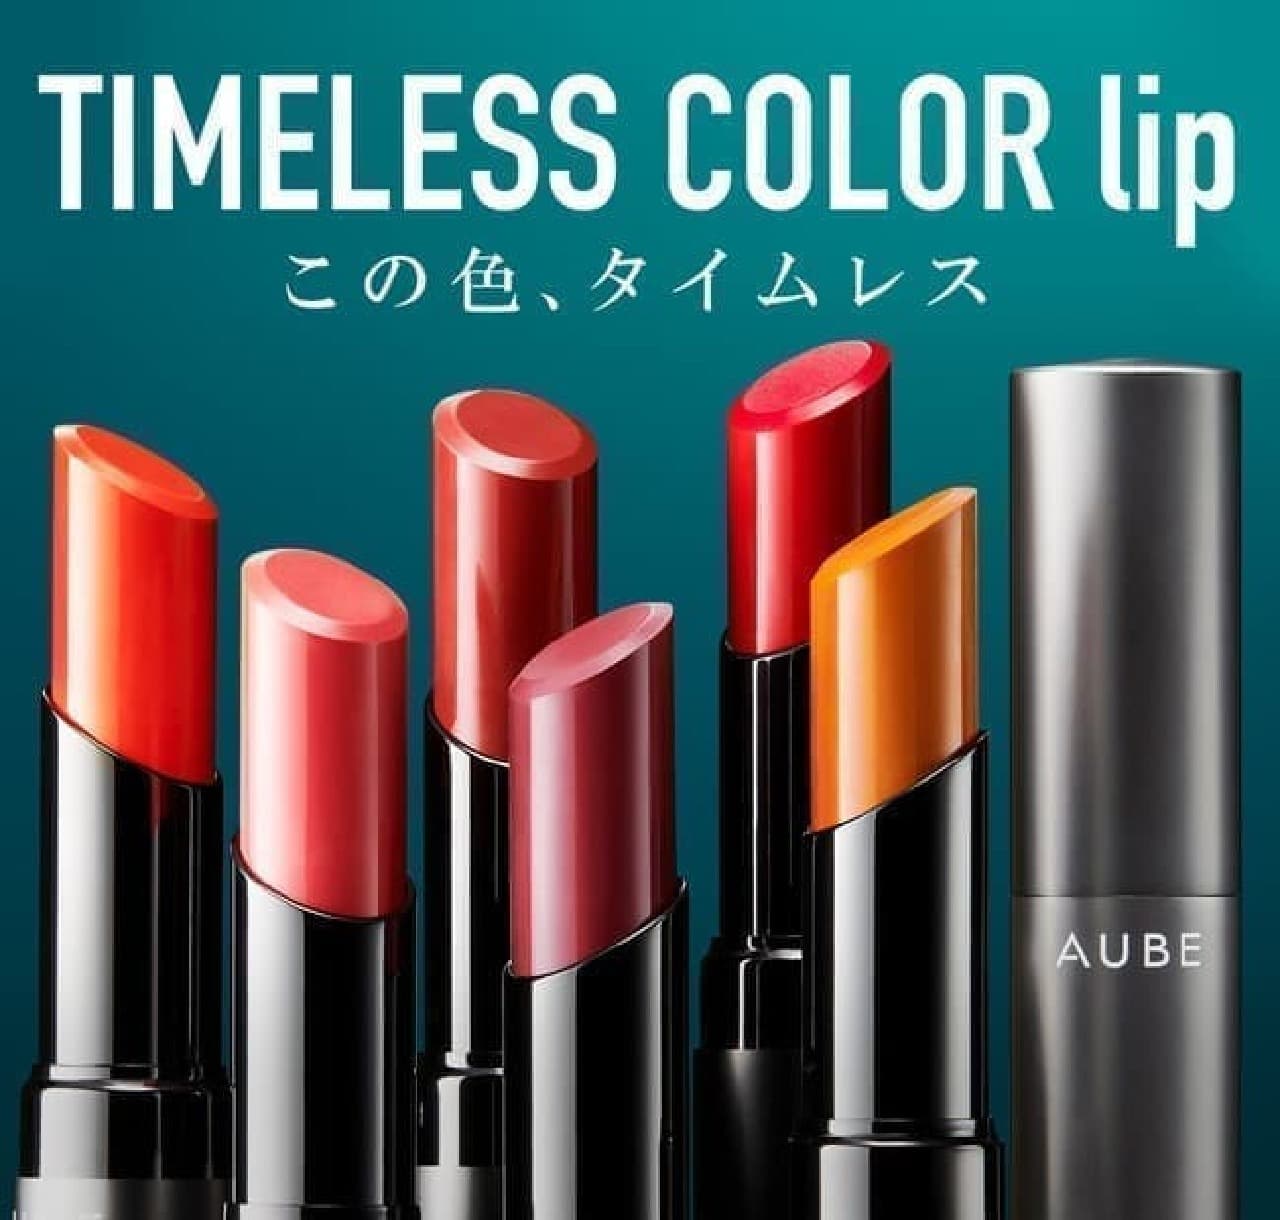 Orb timeless color lip